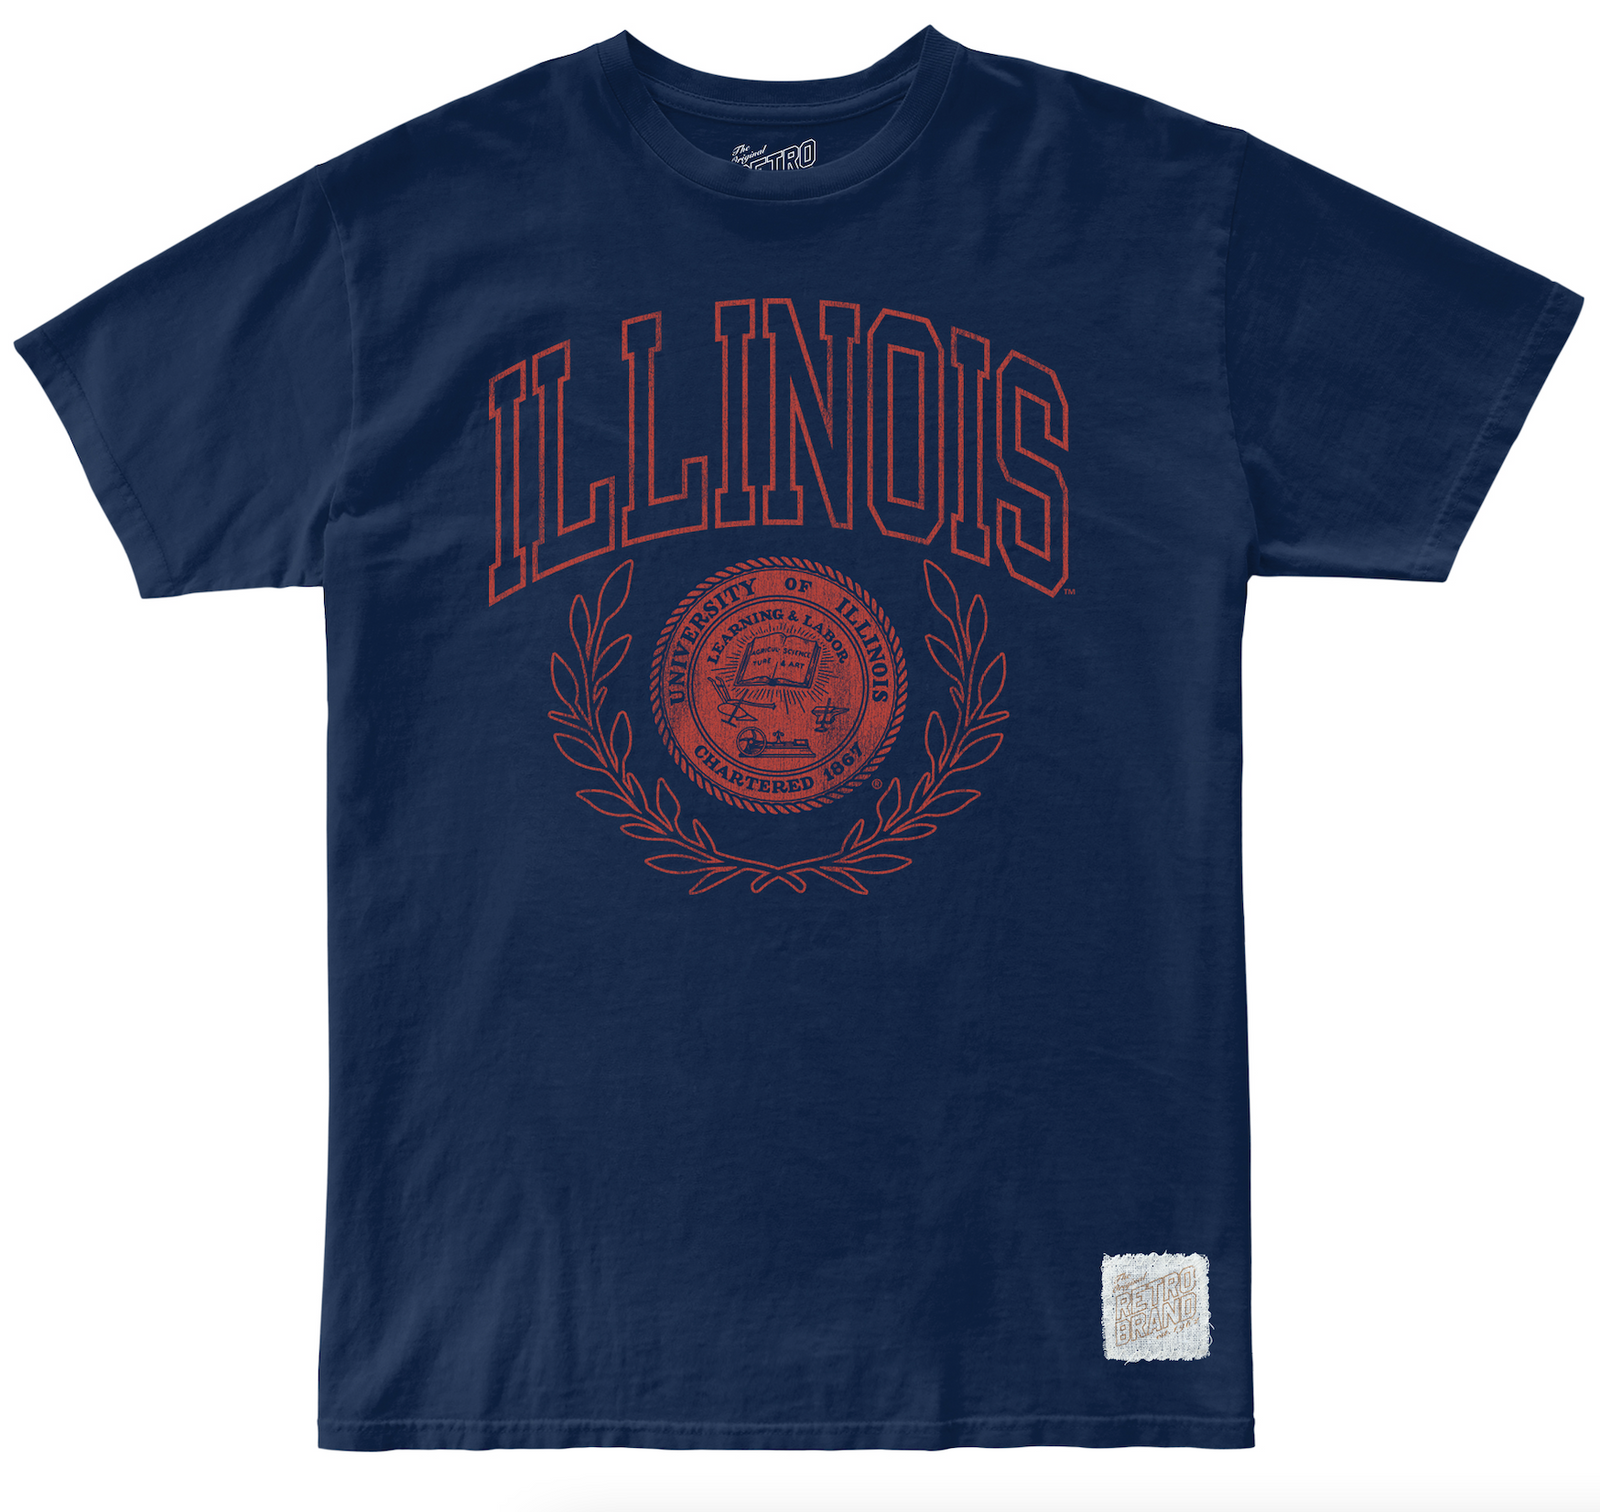 Illinois Orange and Blue Arch Logo and Crest 100% Cotton Unisex Tee